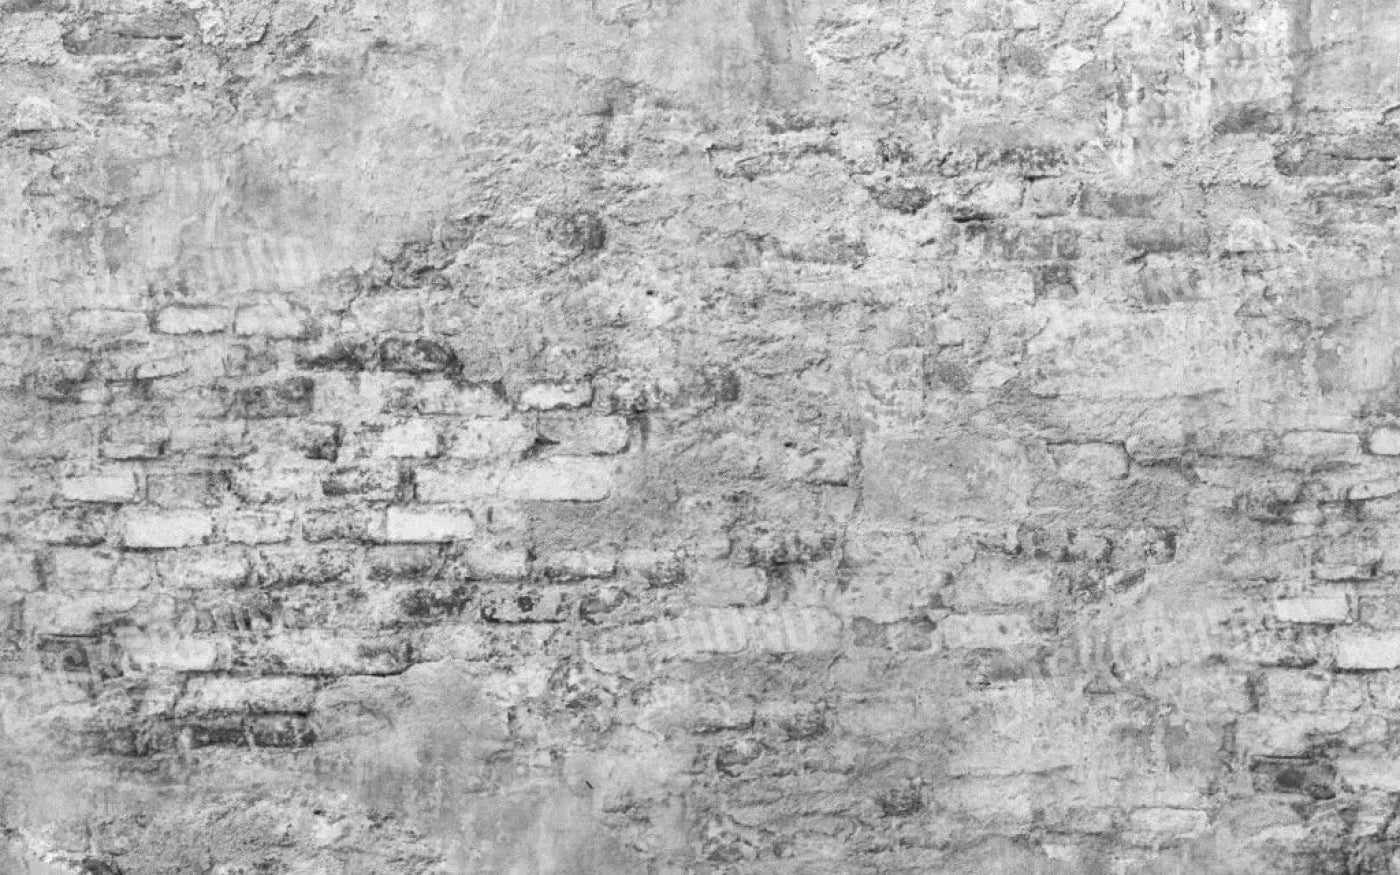 Old Brick Wall 14X9 Ultracloth ( 168 X 108 Inch ) Backdrop